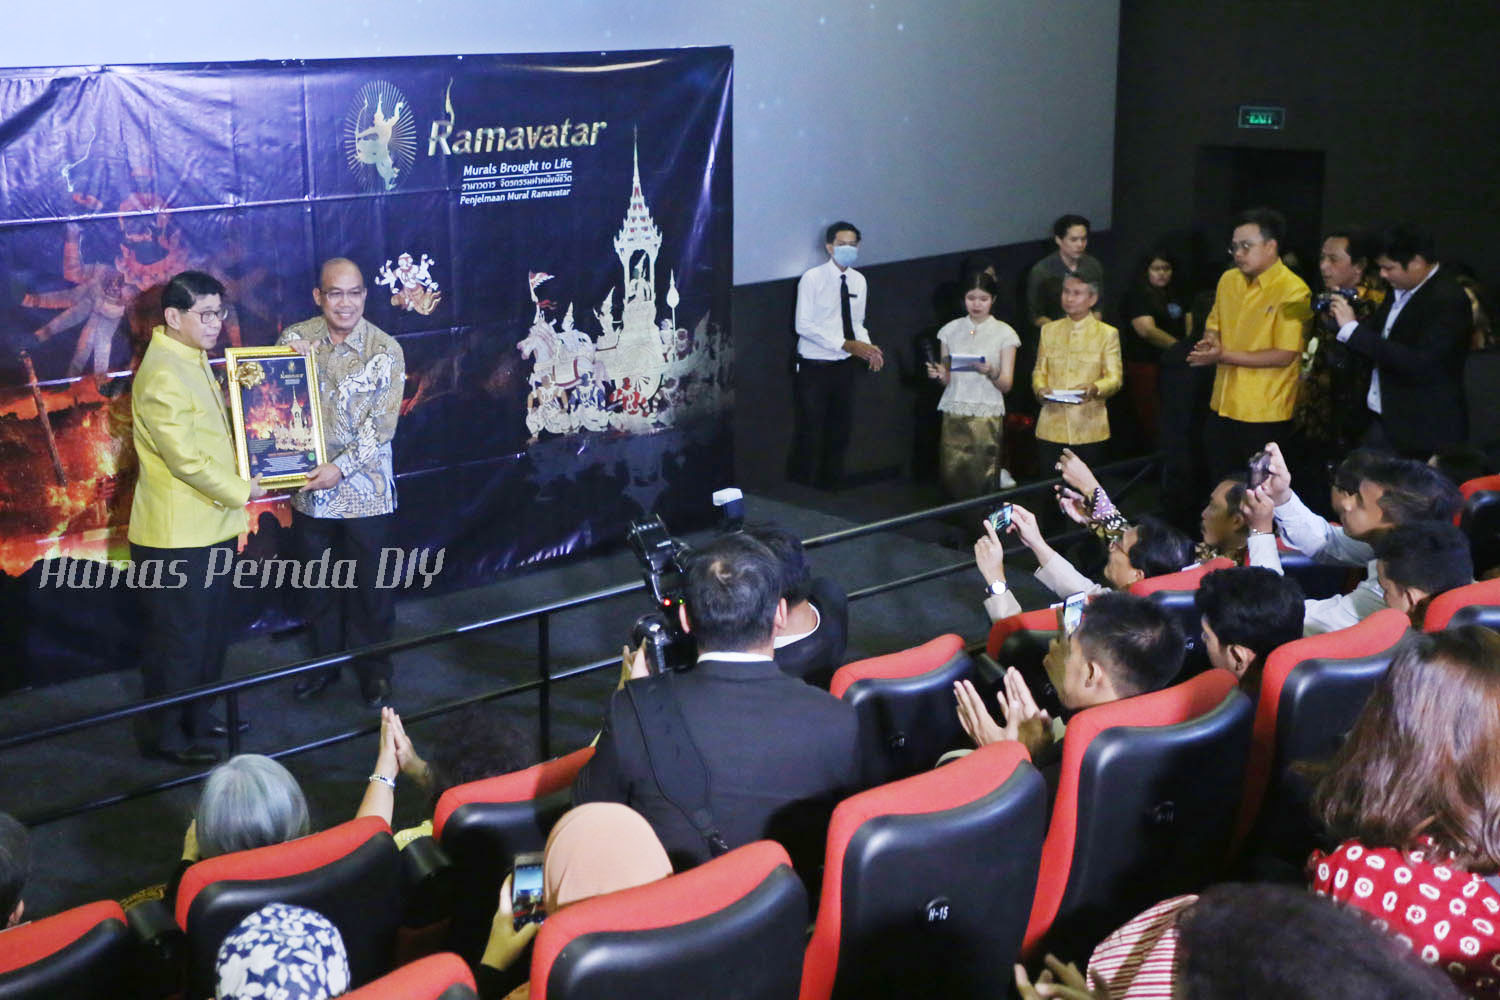  Film Ramavatar, Bukti Harmonisnya Indonesia-Thailand